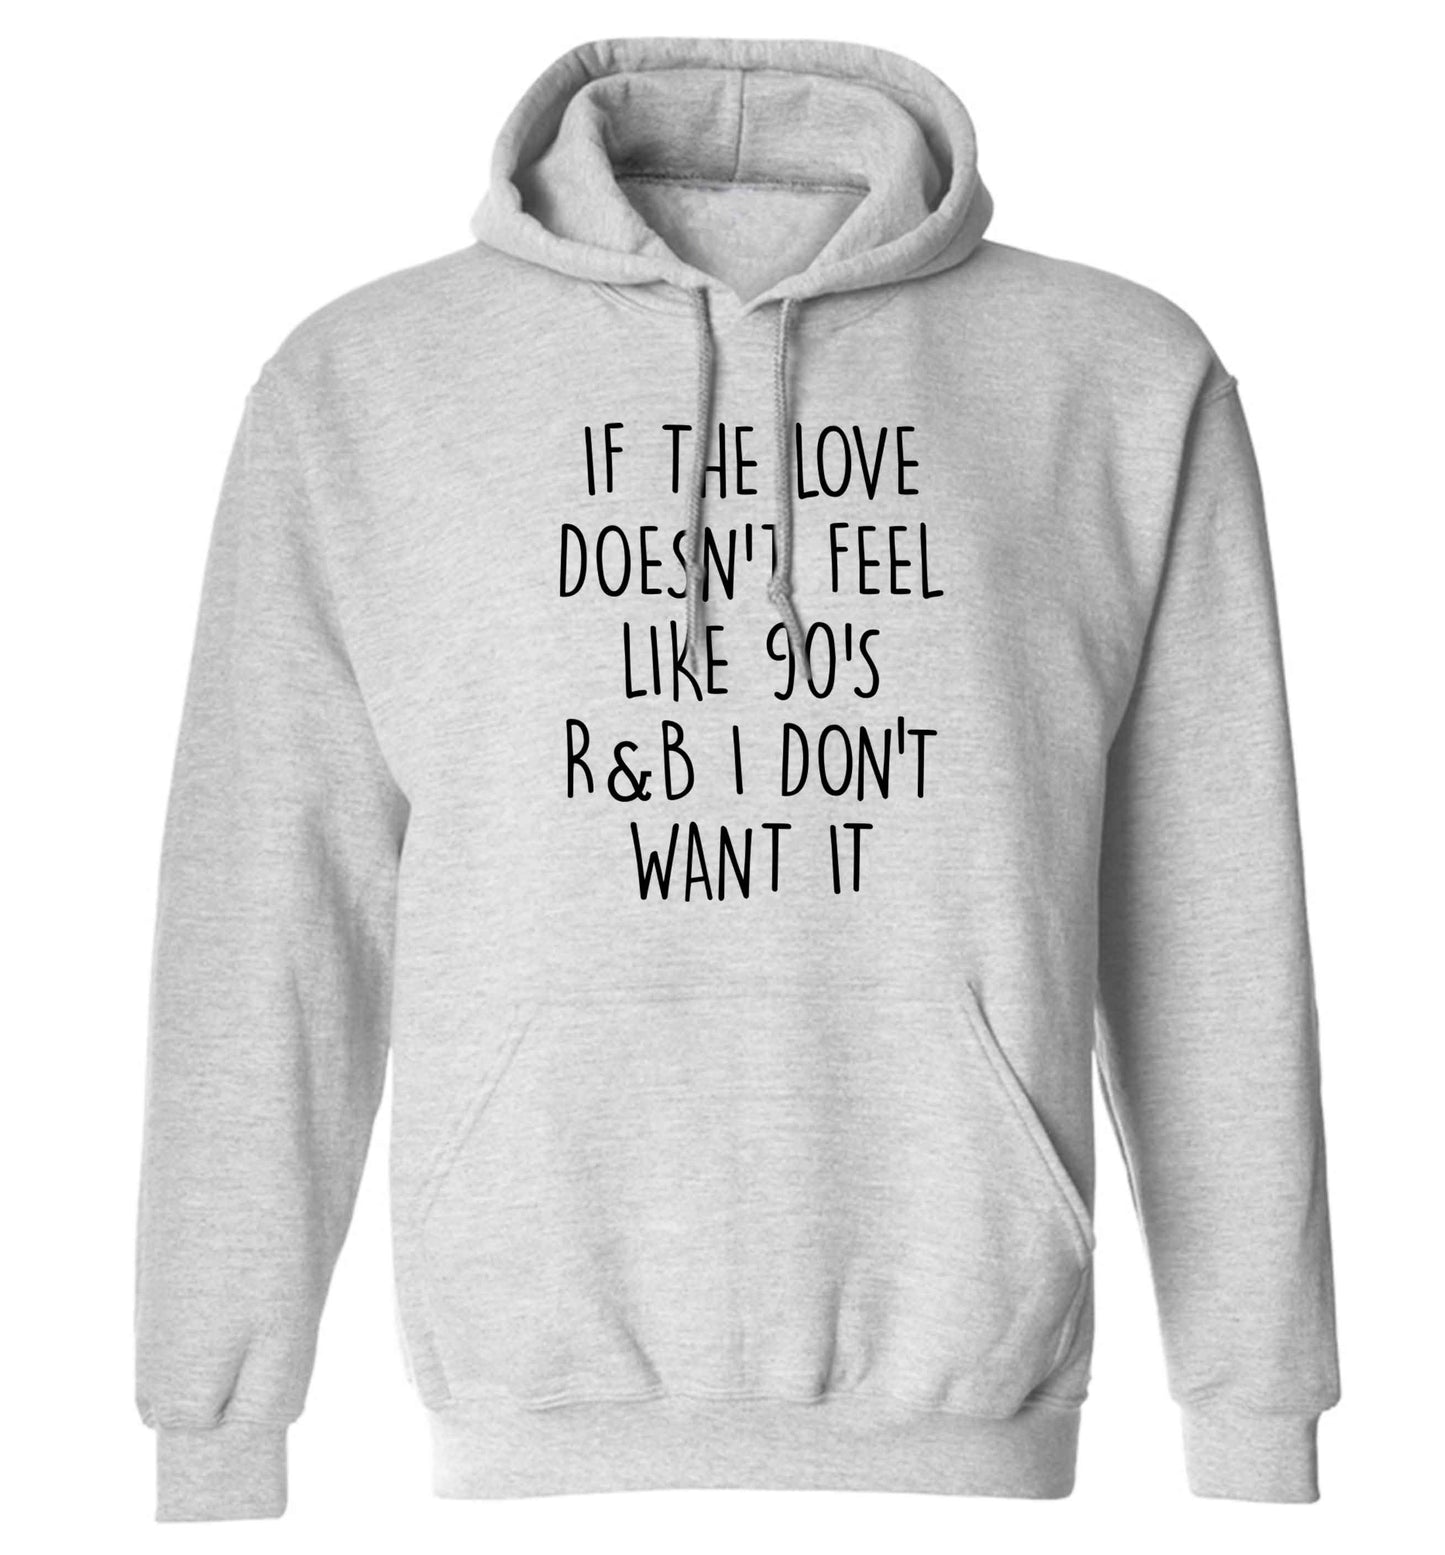 If the love doesn't feel like 90's r&b I don't want it adults unisex grey hoodie 2XL